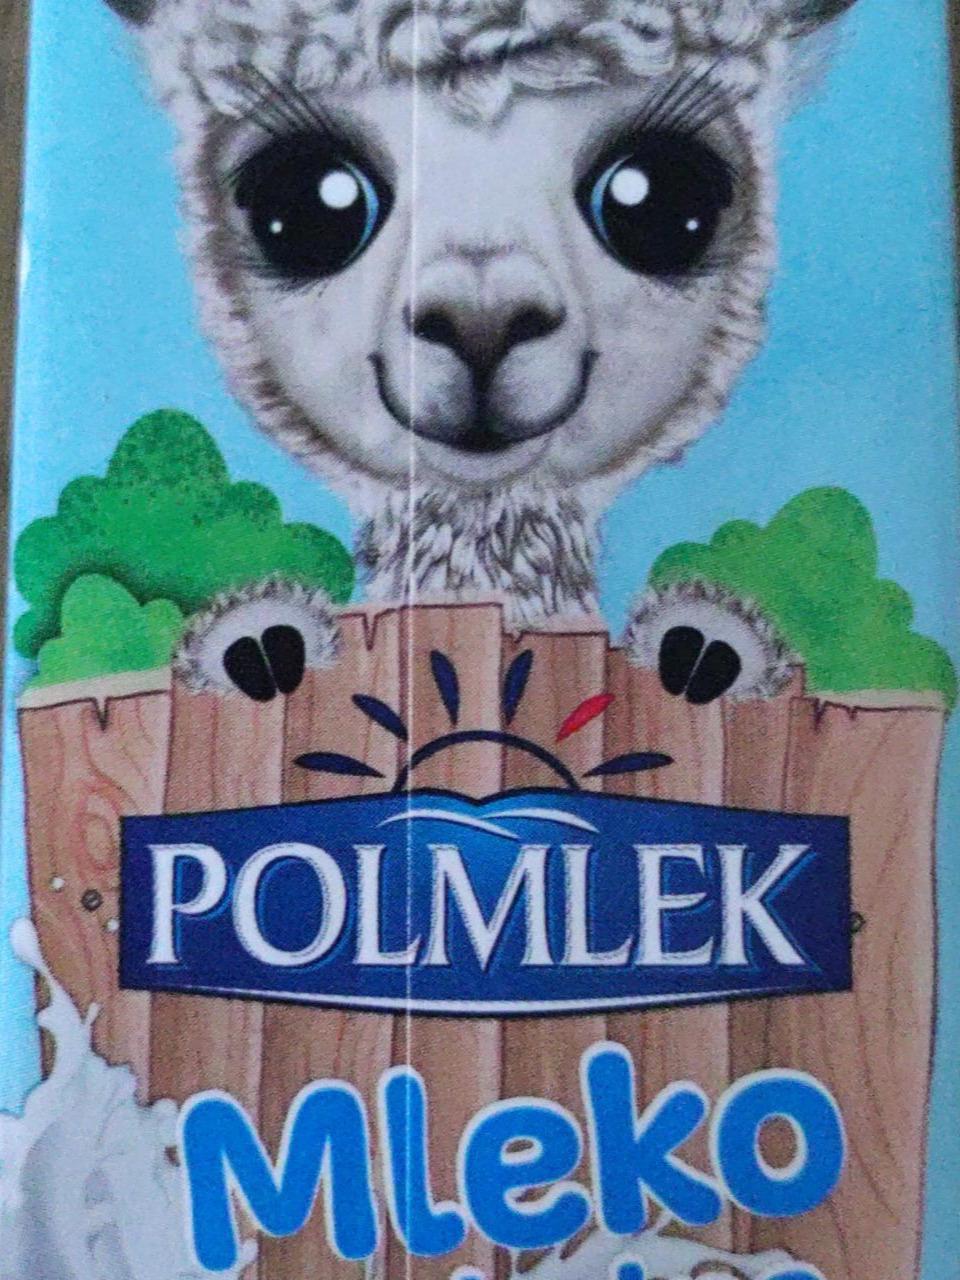 Фото - Mleko 1.5% Polmlek